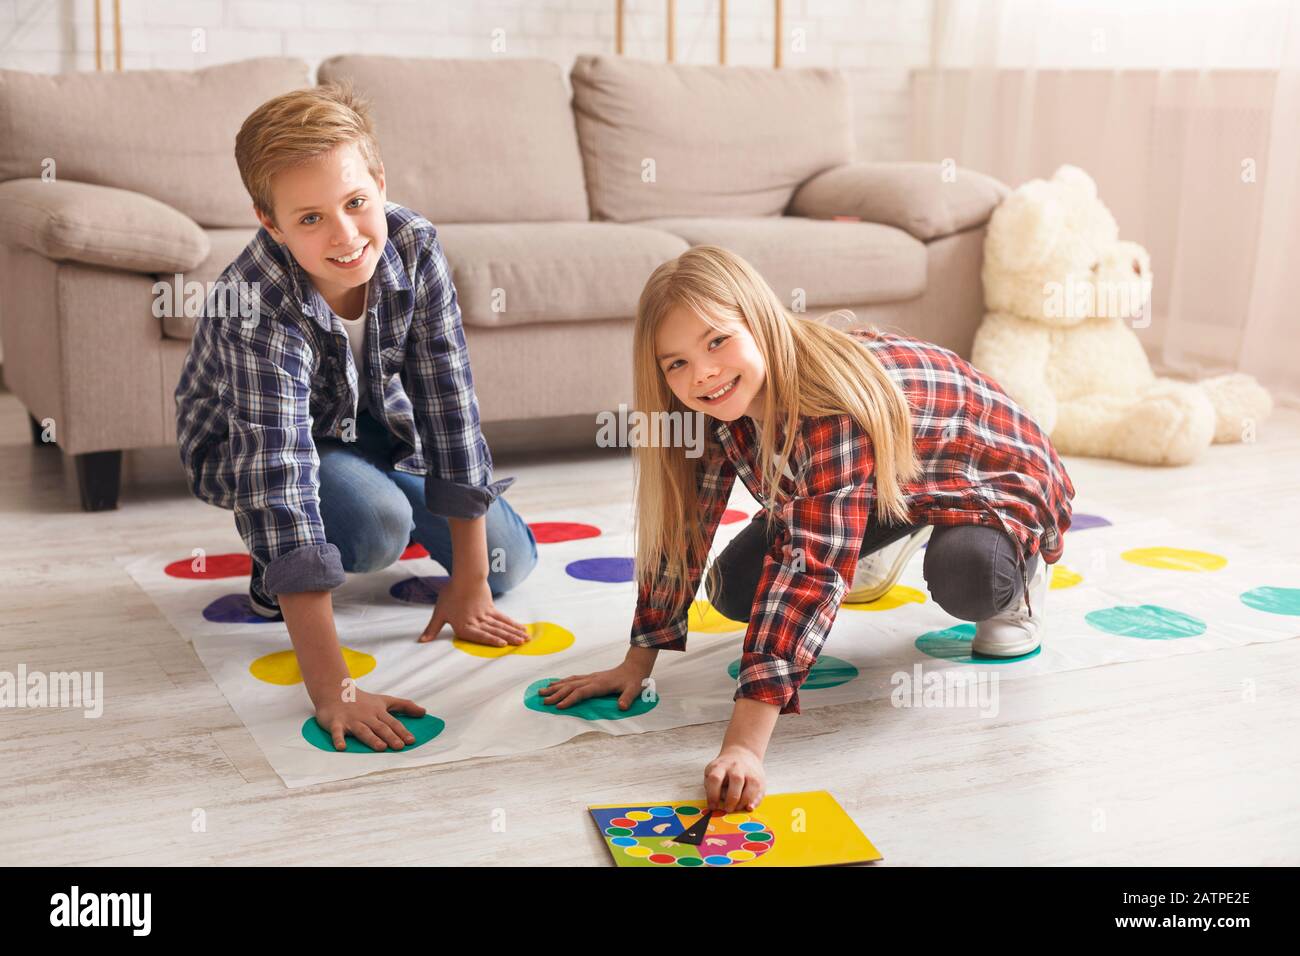 Cheerful siblings playing twister game on floor having fun indoor Stock Photo